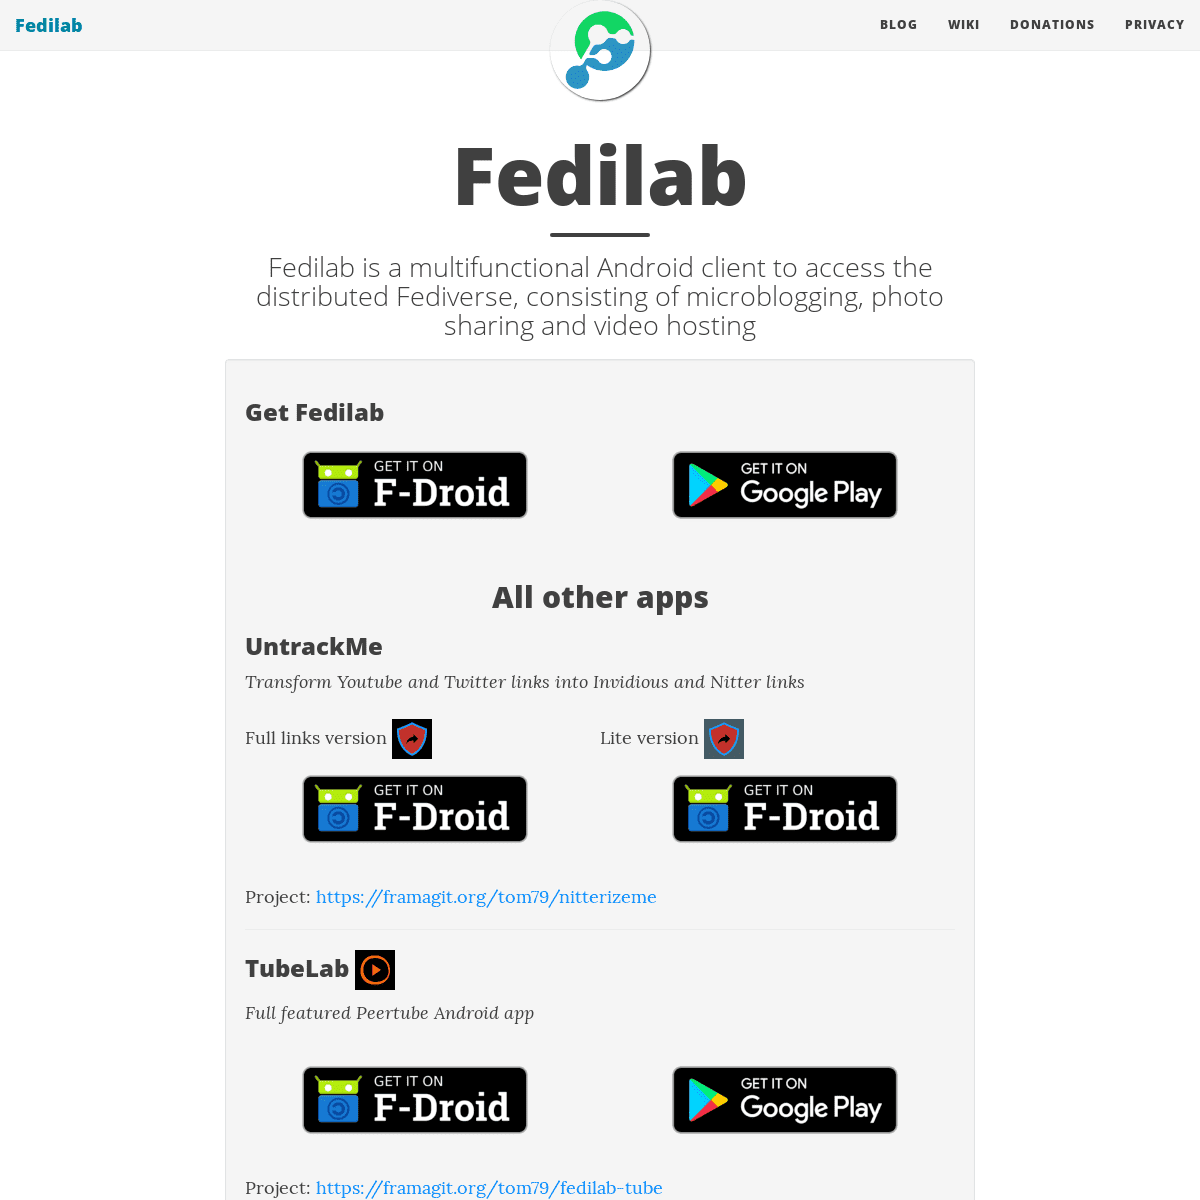 A complete backup of https://fedilab.app